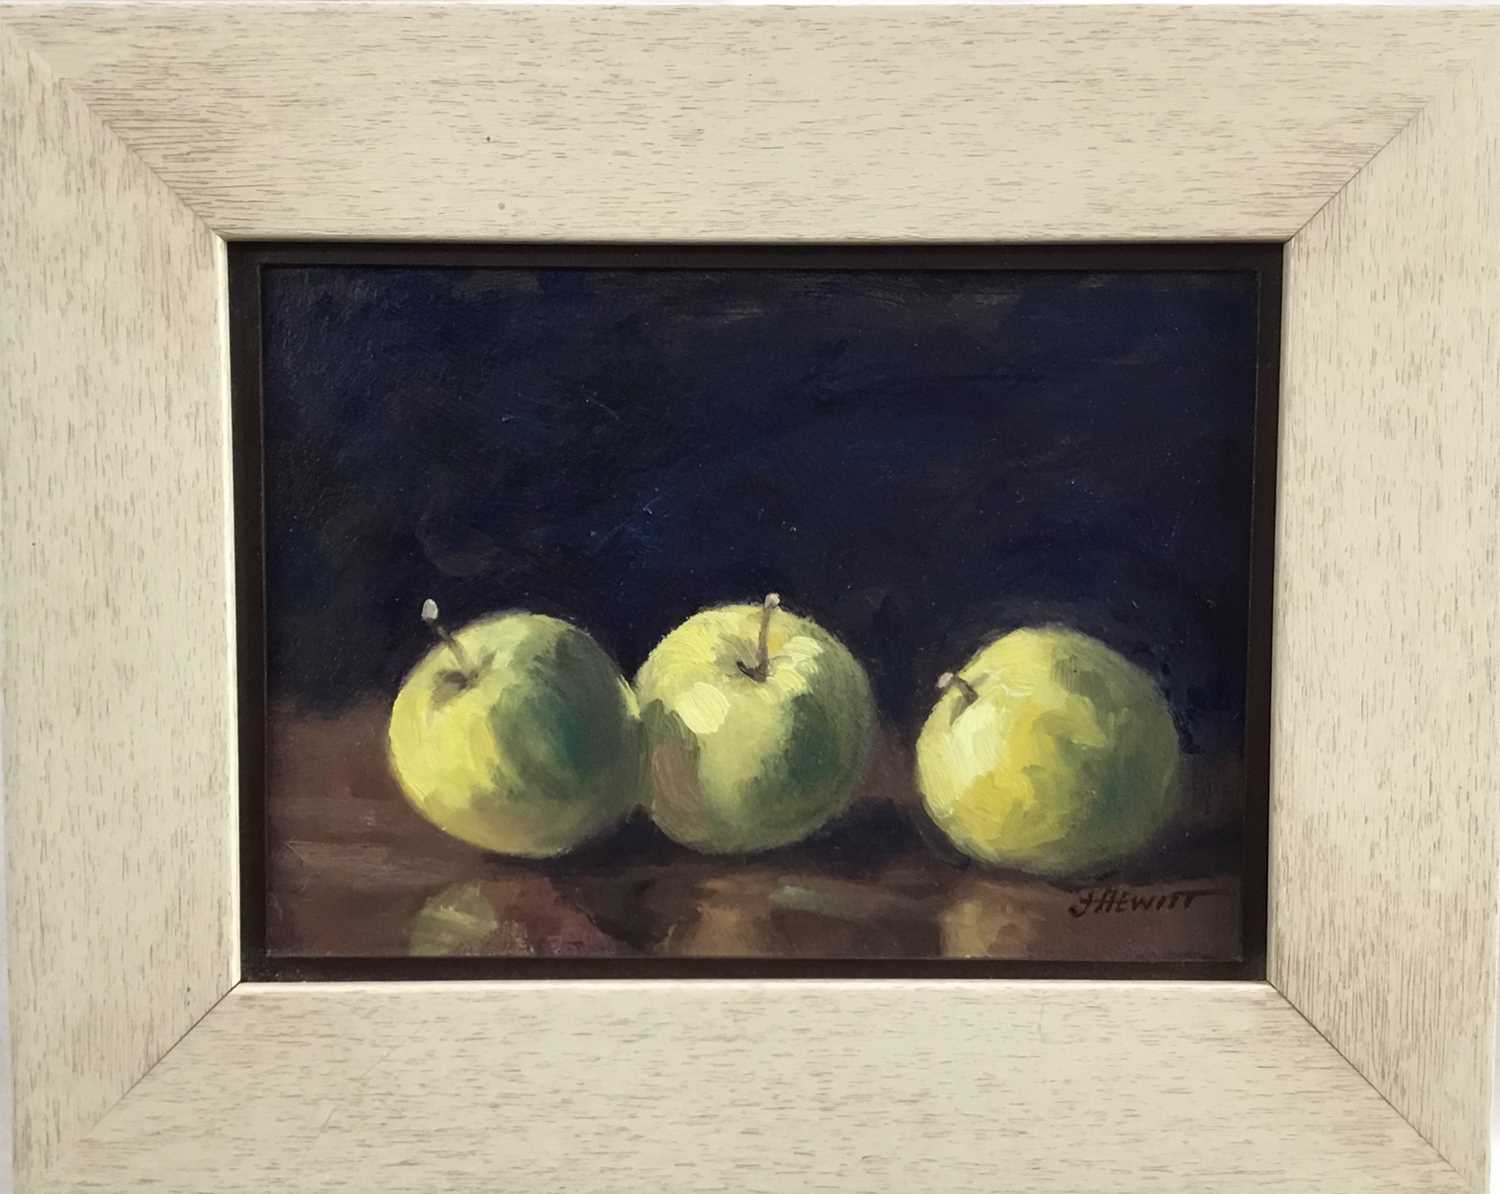 Lot 40 - James Hewitt (b. 1934) oil on board - ‘Three Small Apples’, signed, 19cm x 13.5cm, framed